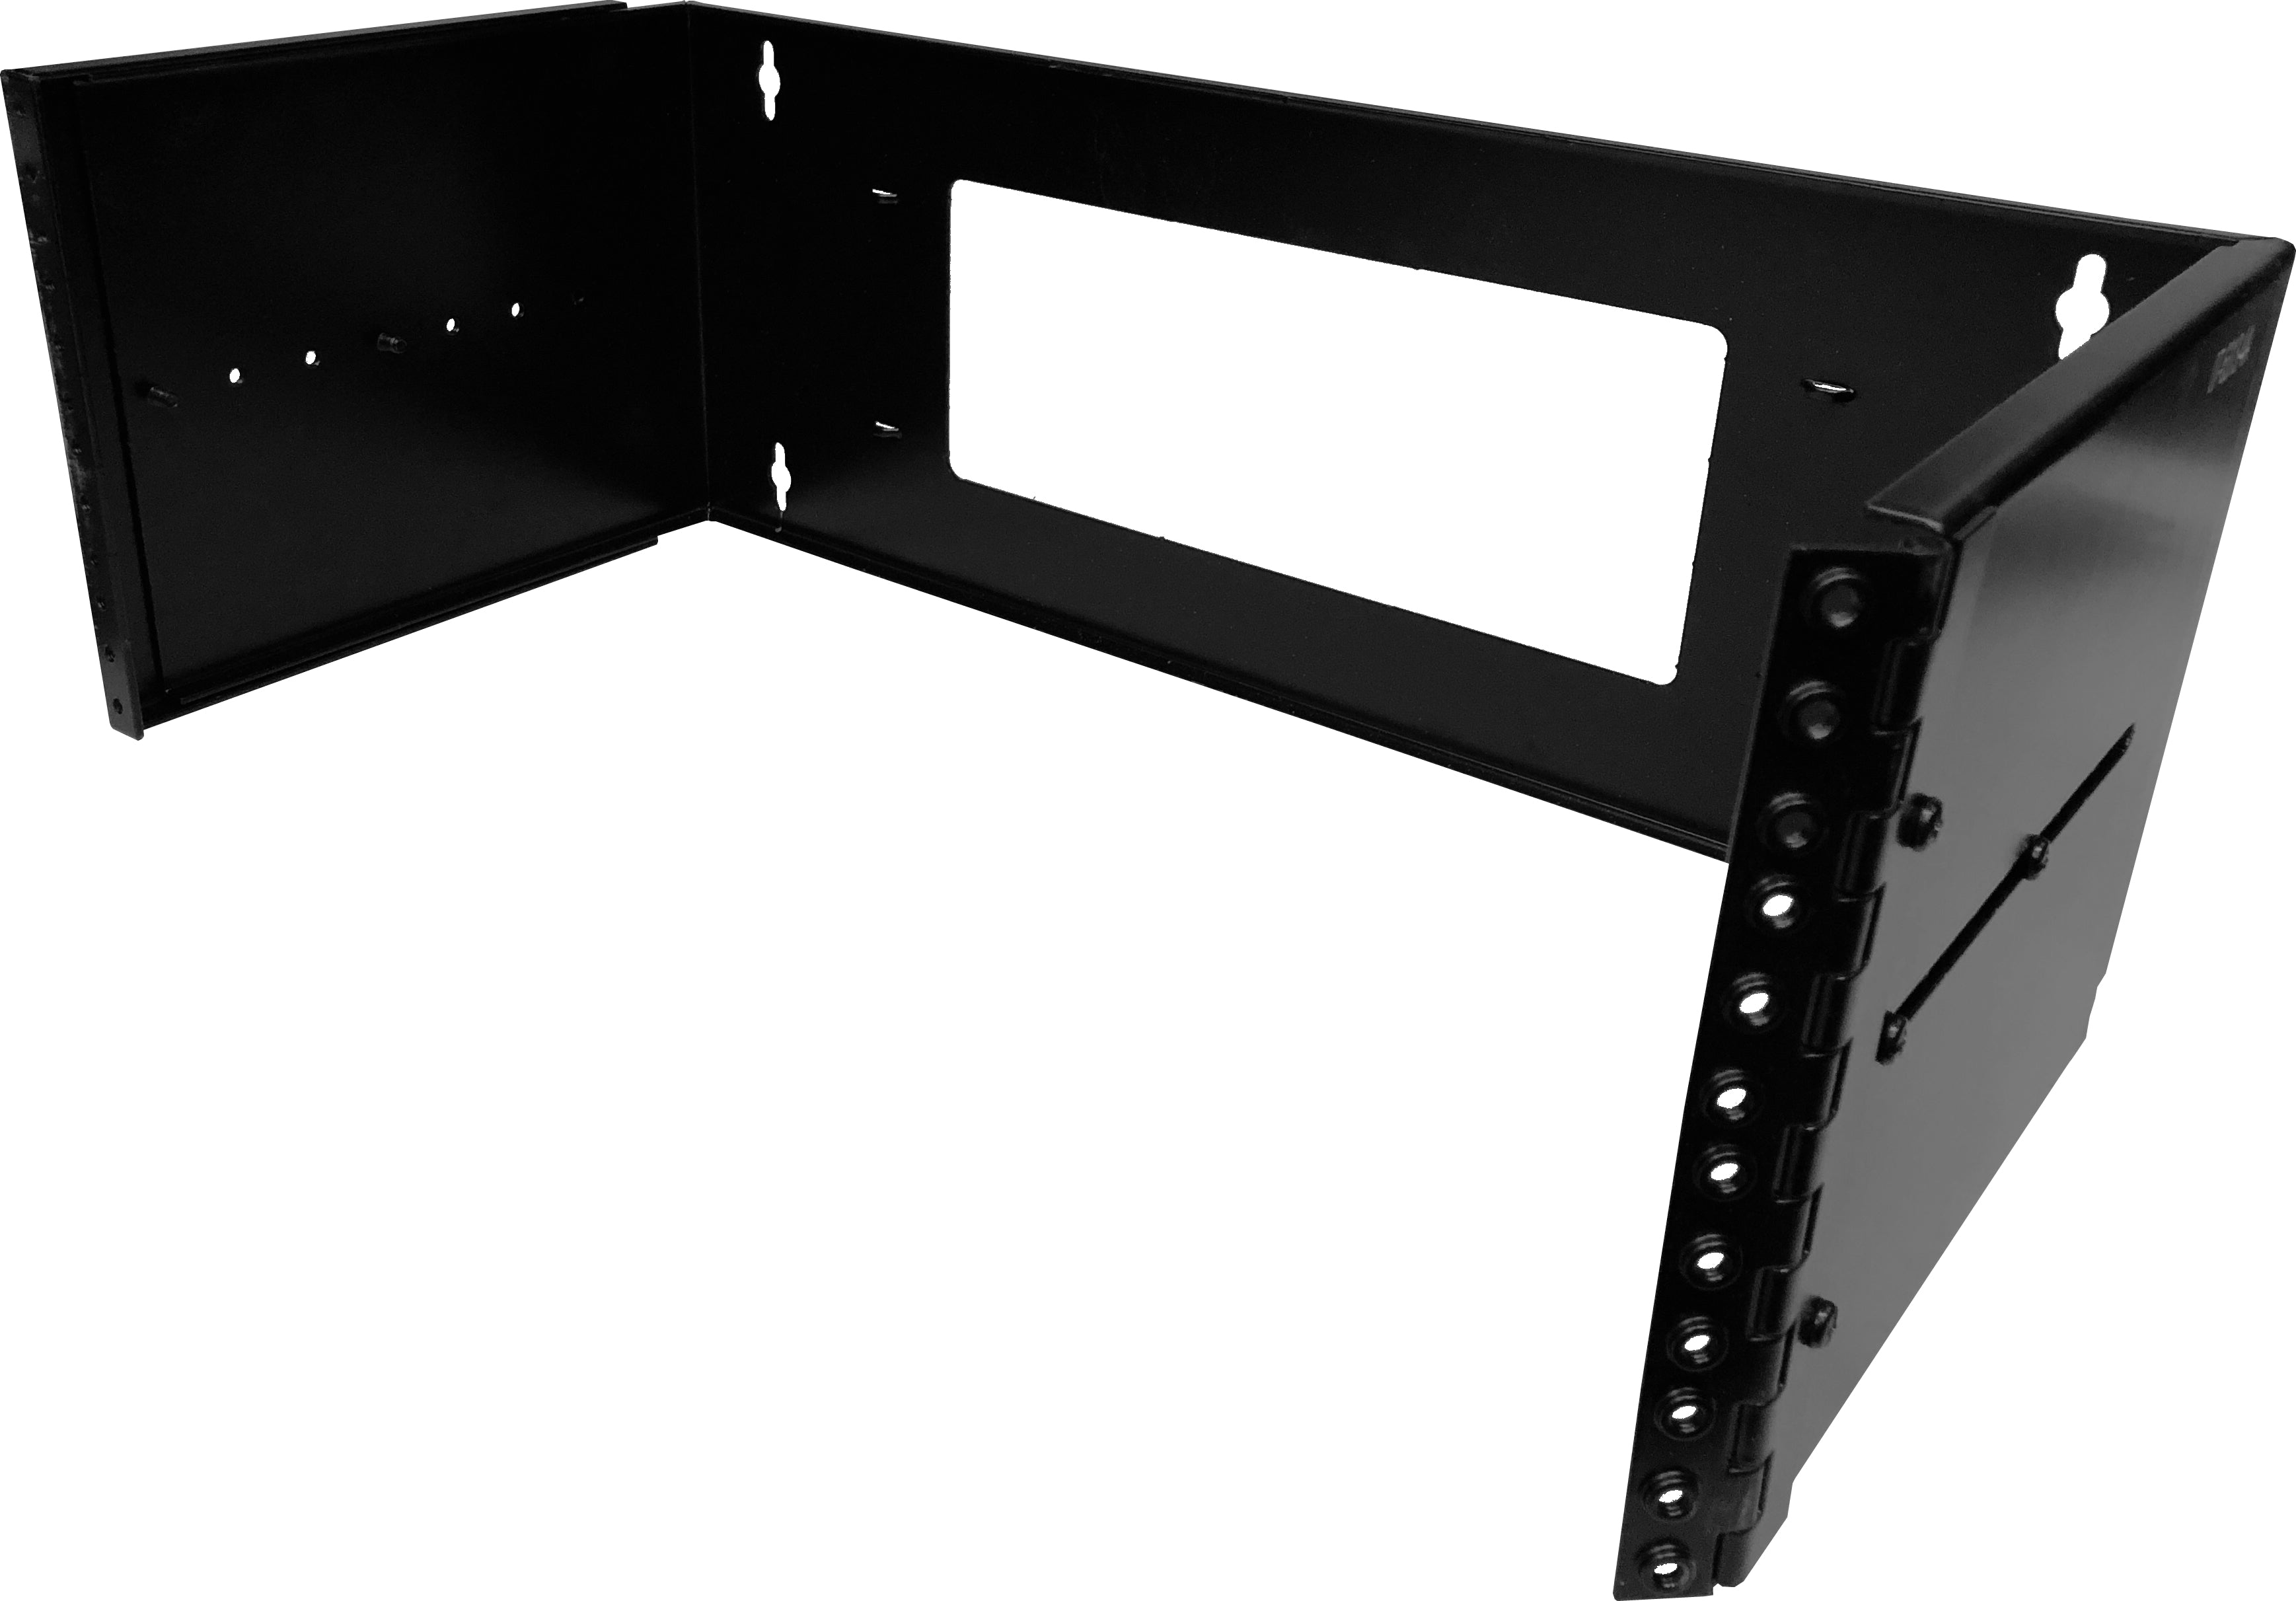 07-6313-04 4U Extendable Steel Wall Mount Server Bracket with Hinge Design